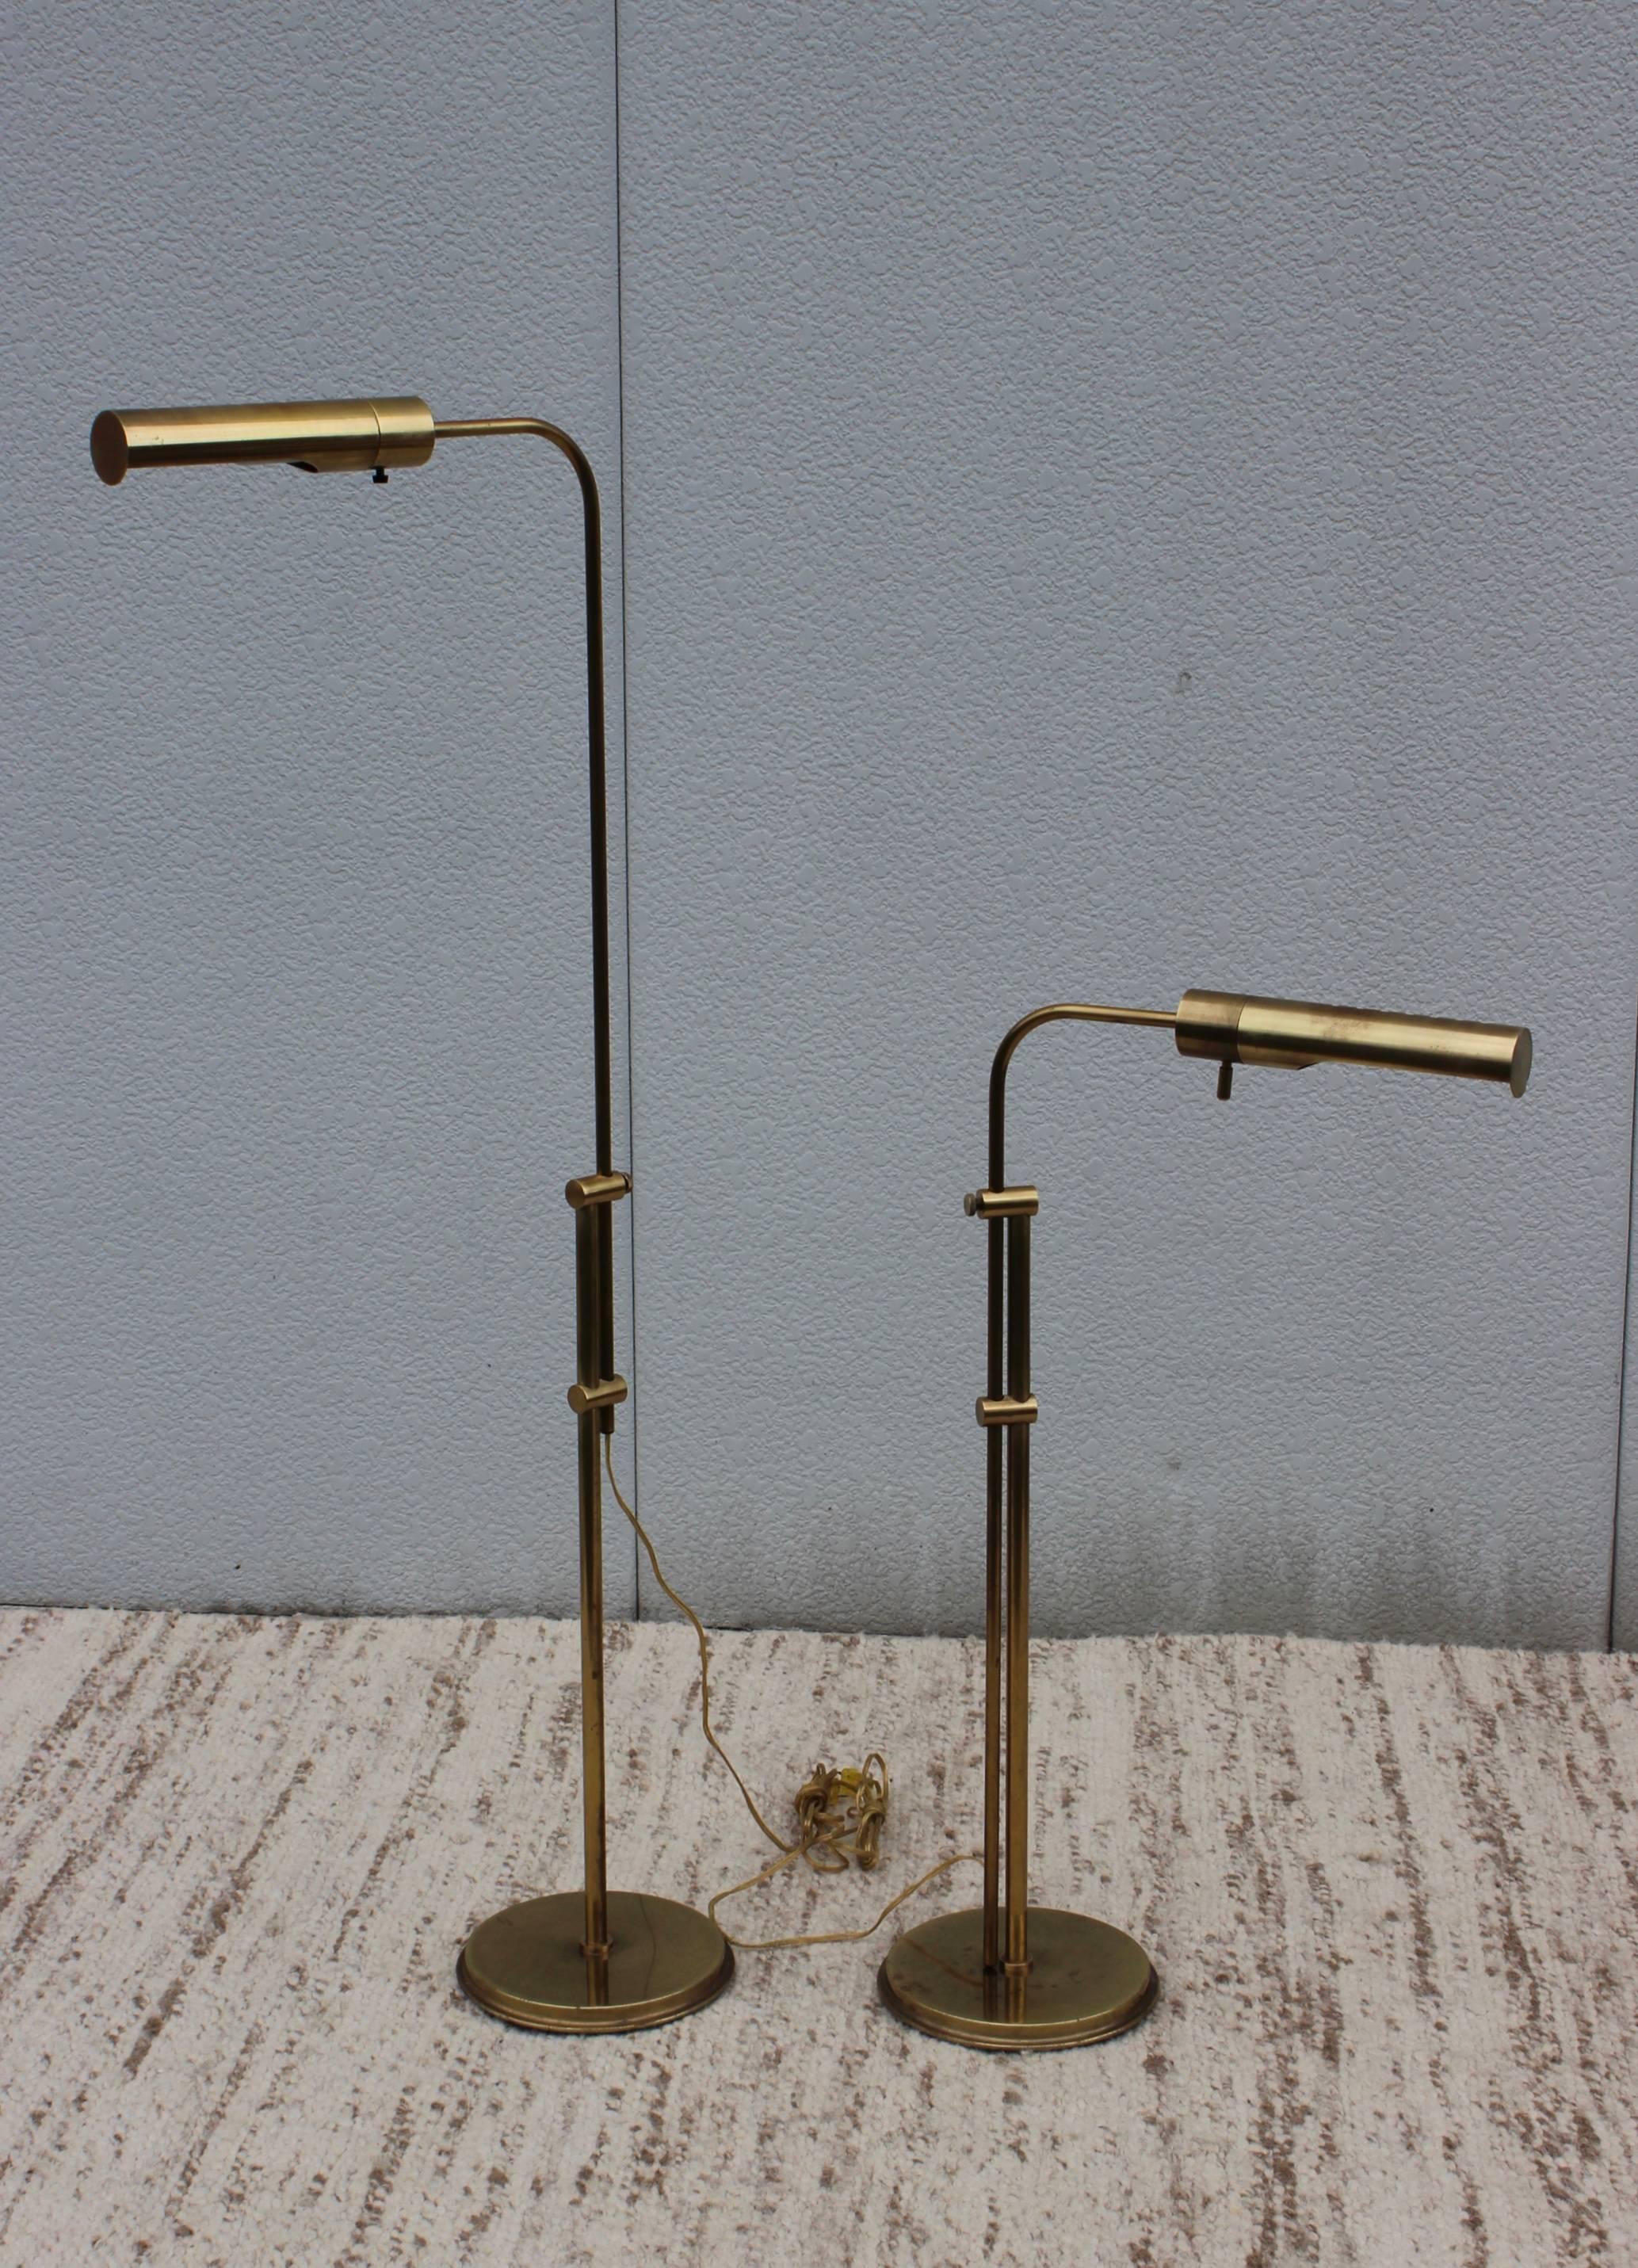 1970s adjustable height brass floor lamps by Frederick Cooper.